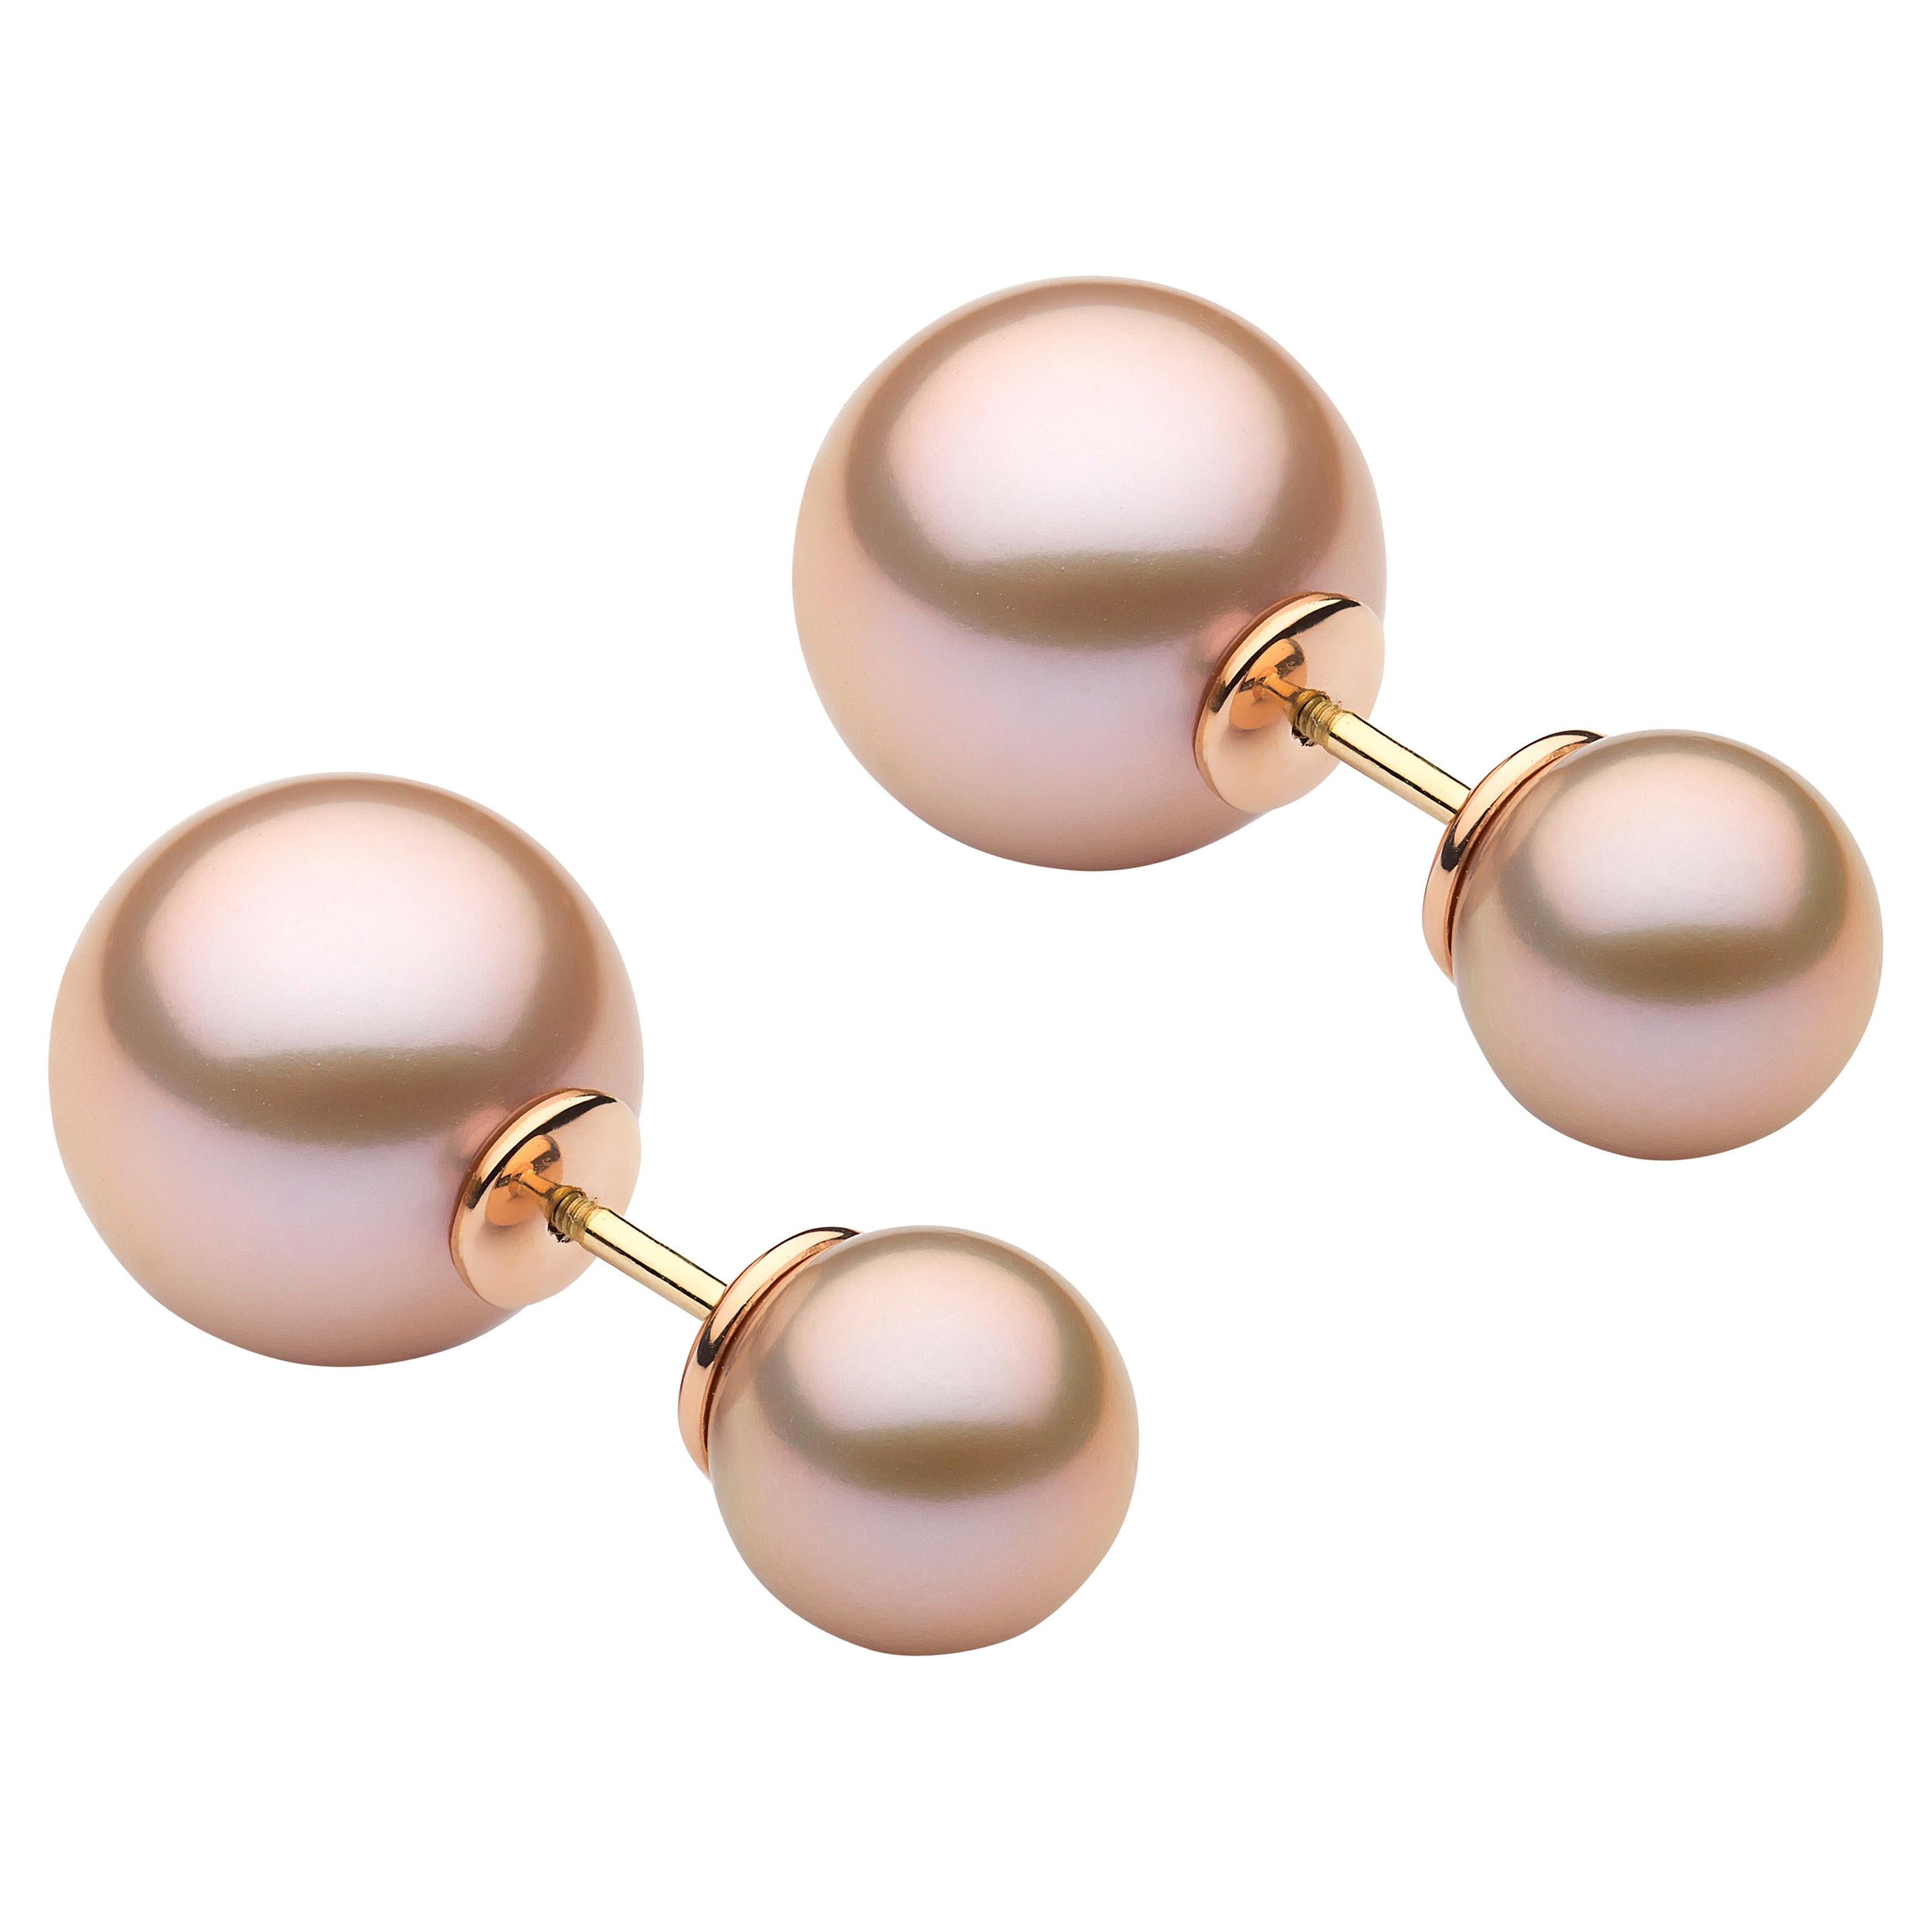 Yoko London Pink Freshwater Duet Earrings in 18 Karat Rose Gold